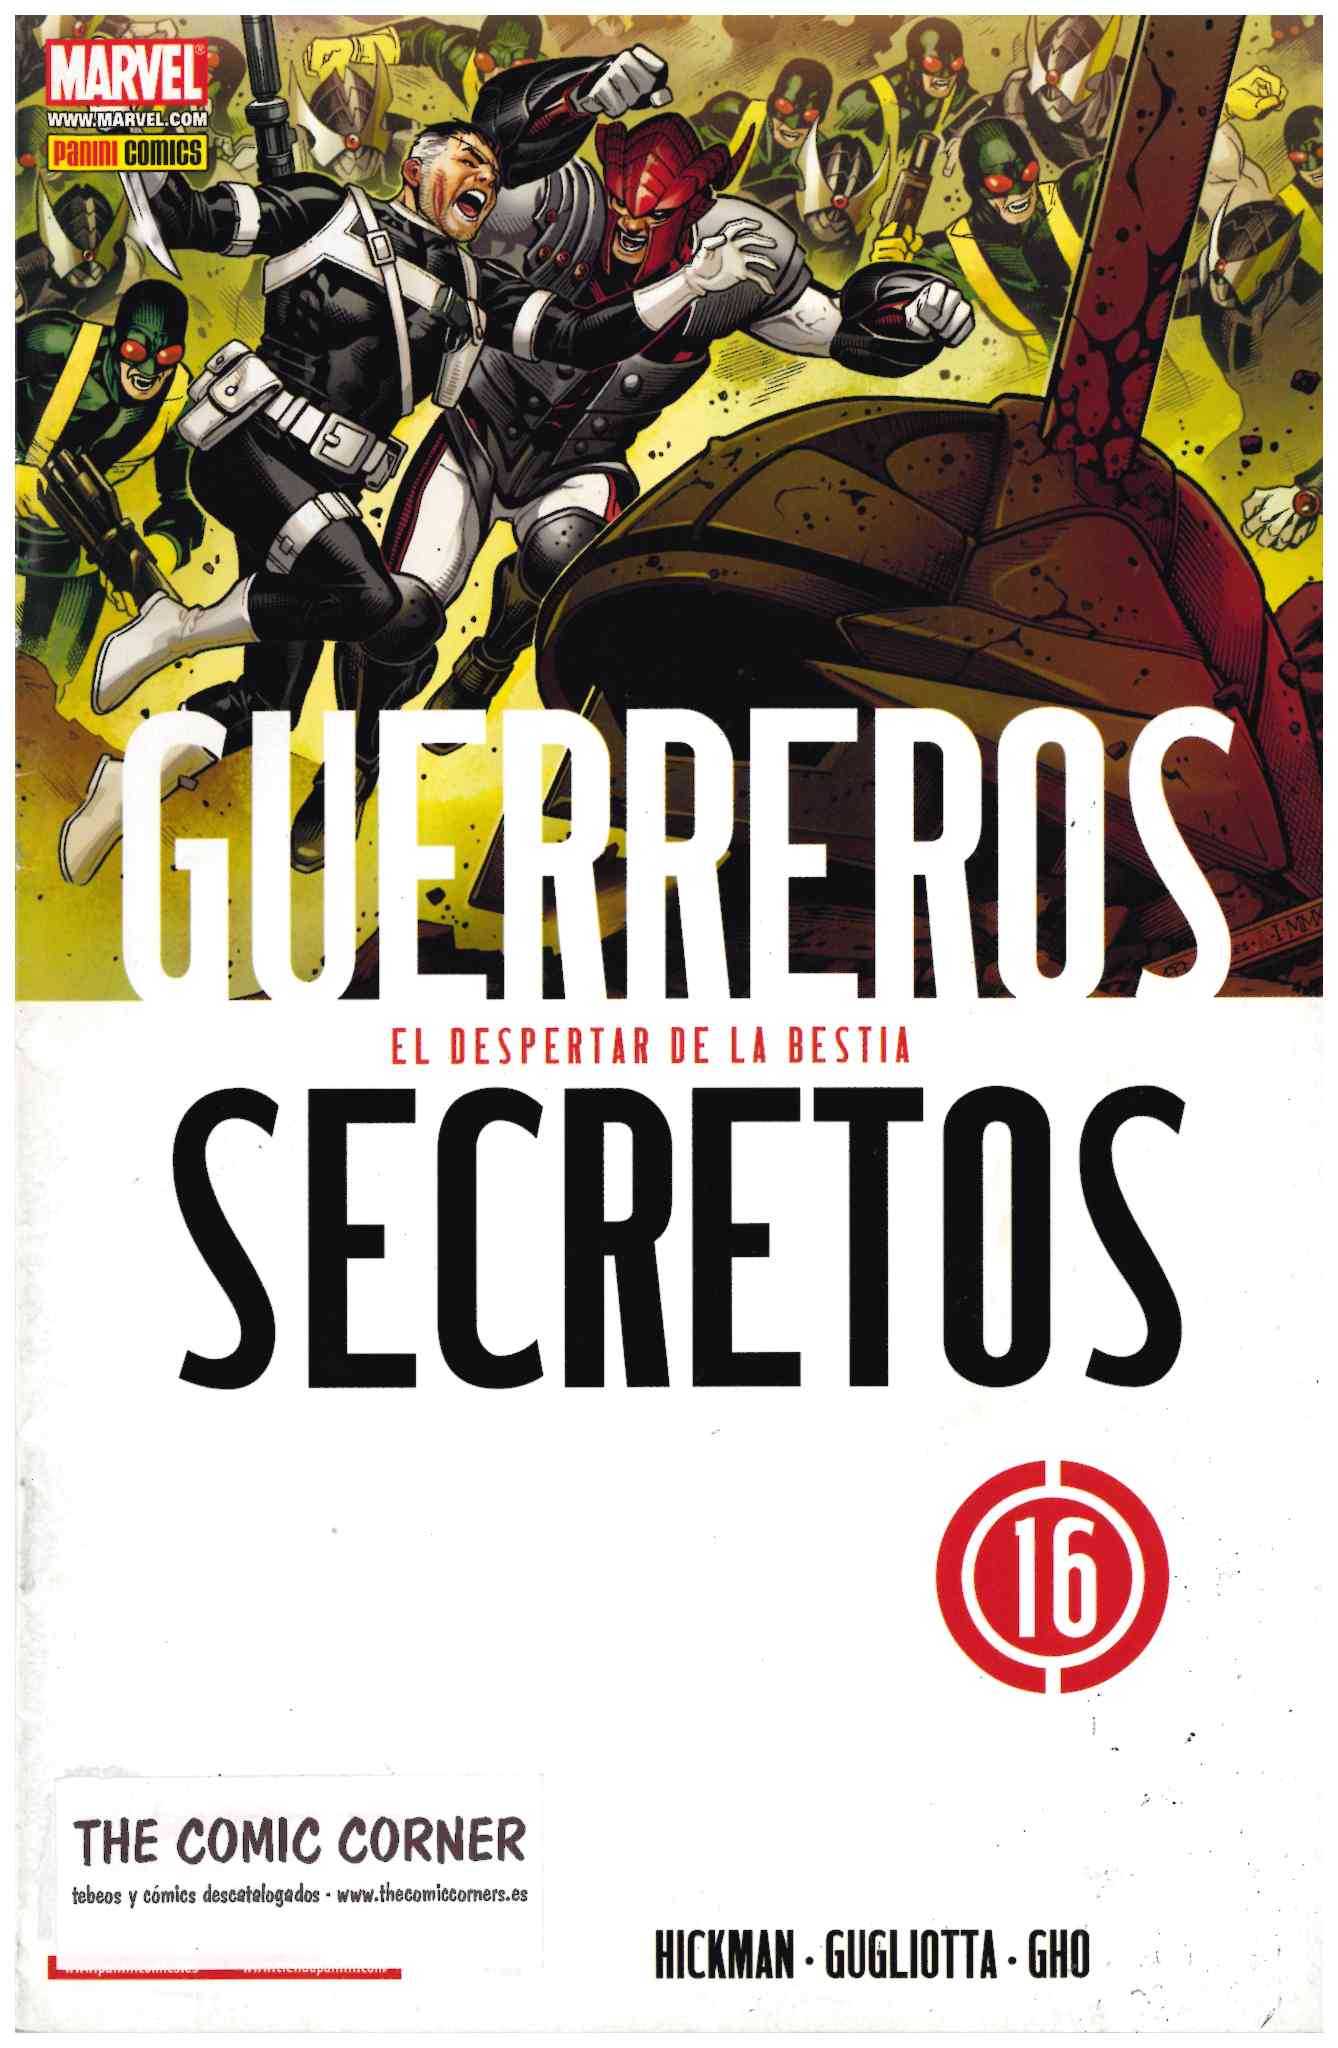 Guerreros Secretos. Panini 2009. Nº 16